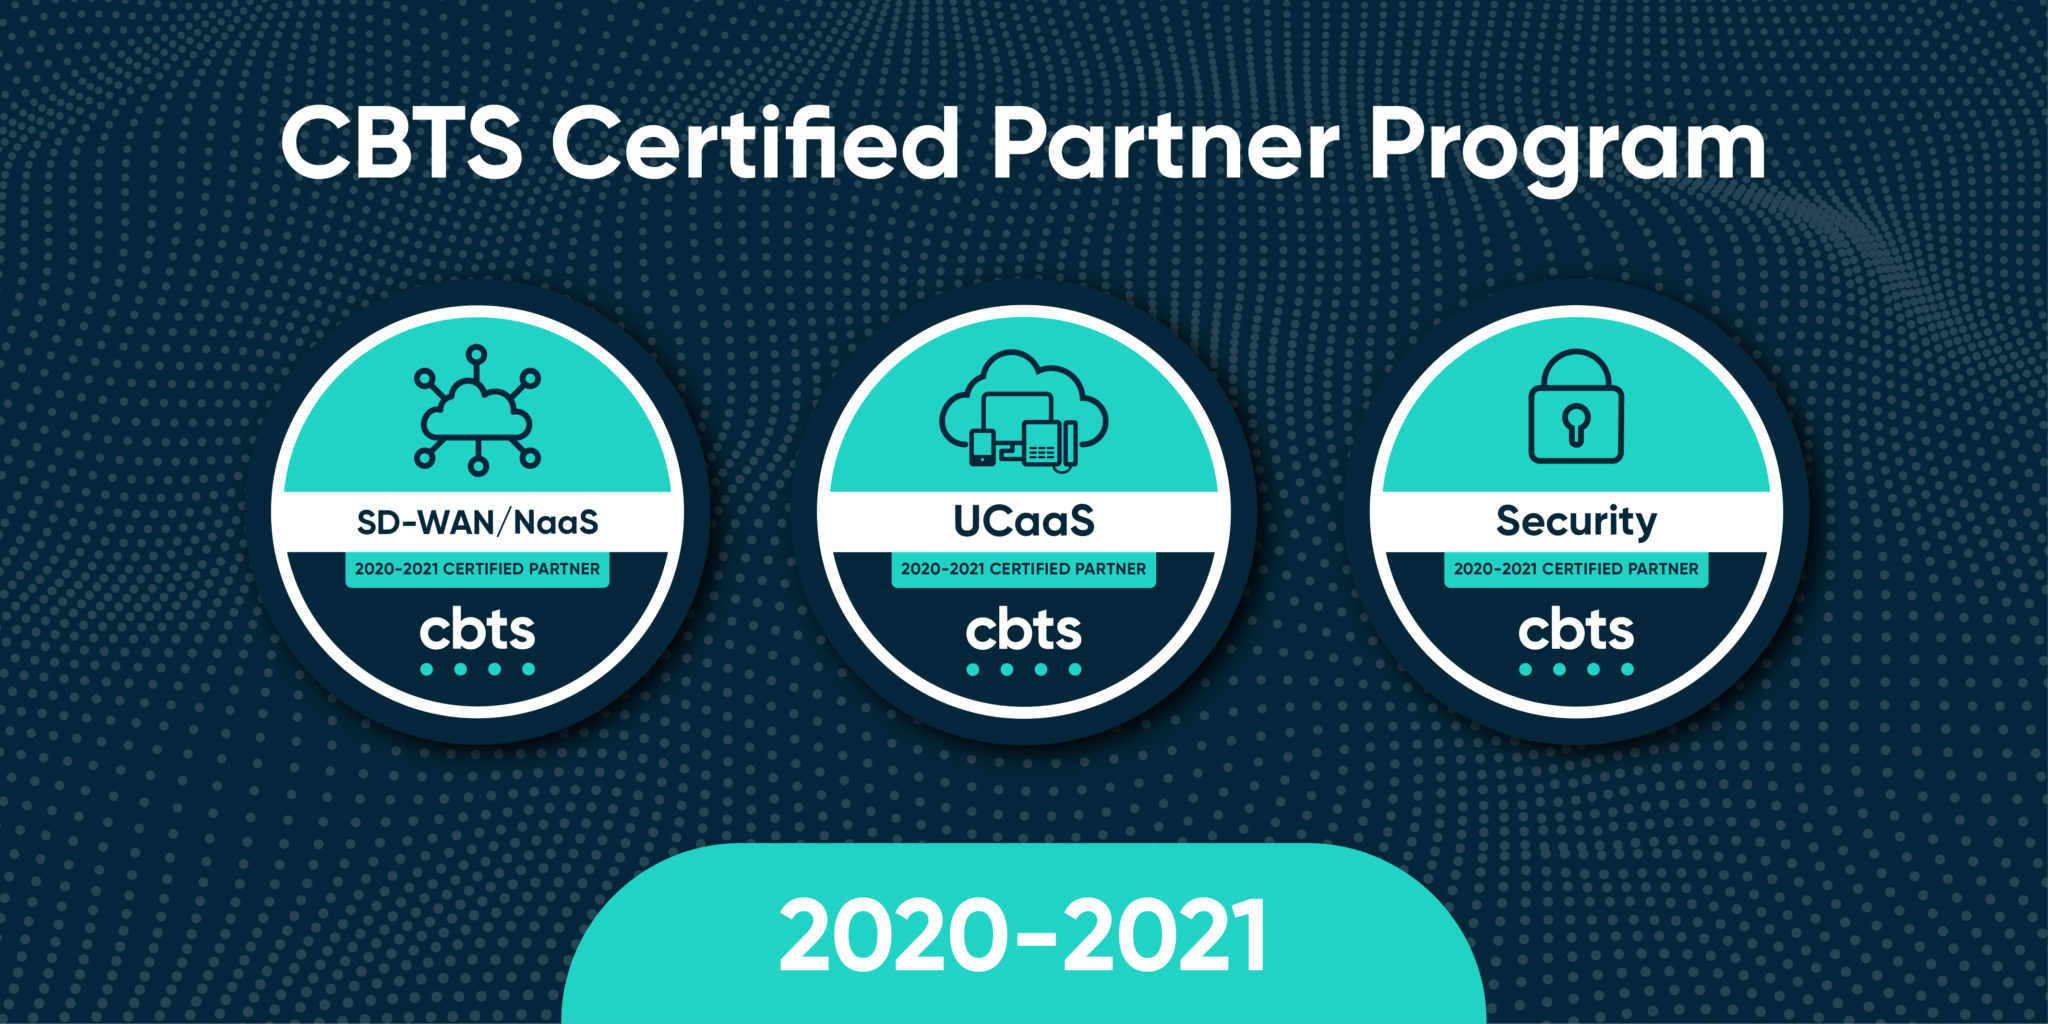 CBTS Certified Partner Program 2020-2021